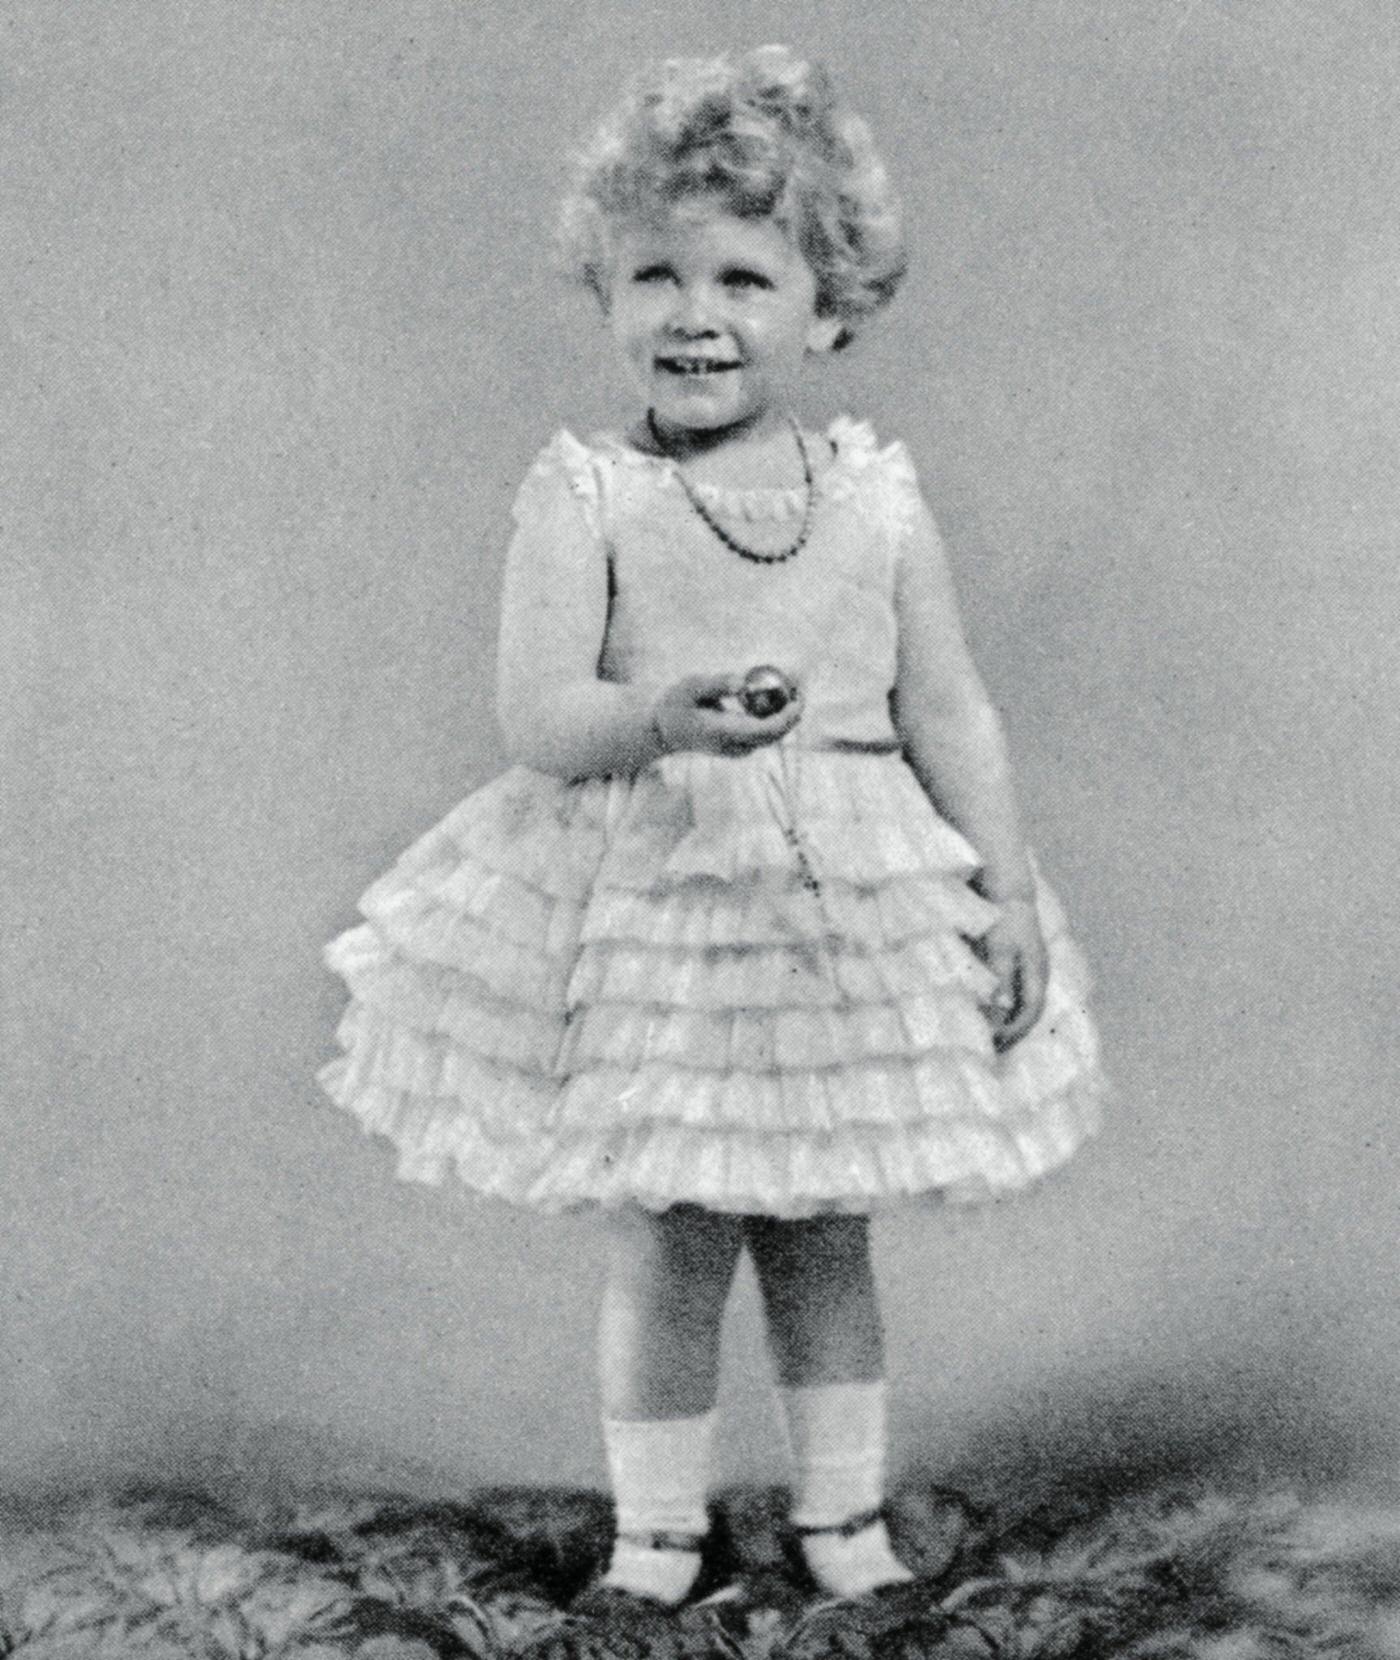 Princess Elizabeth aged two in 1928.